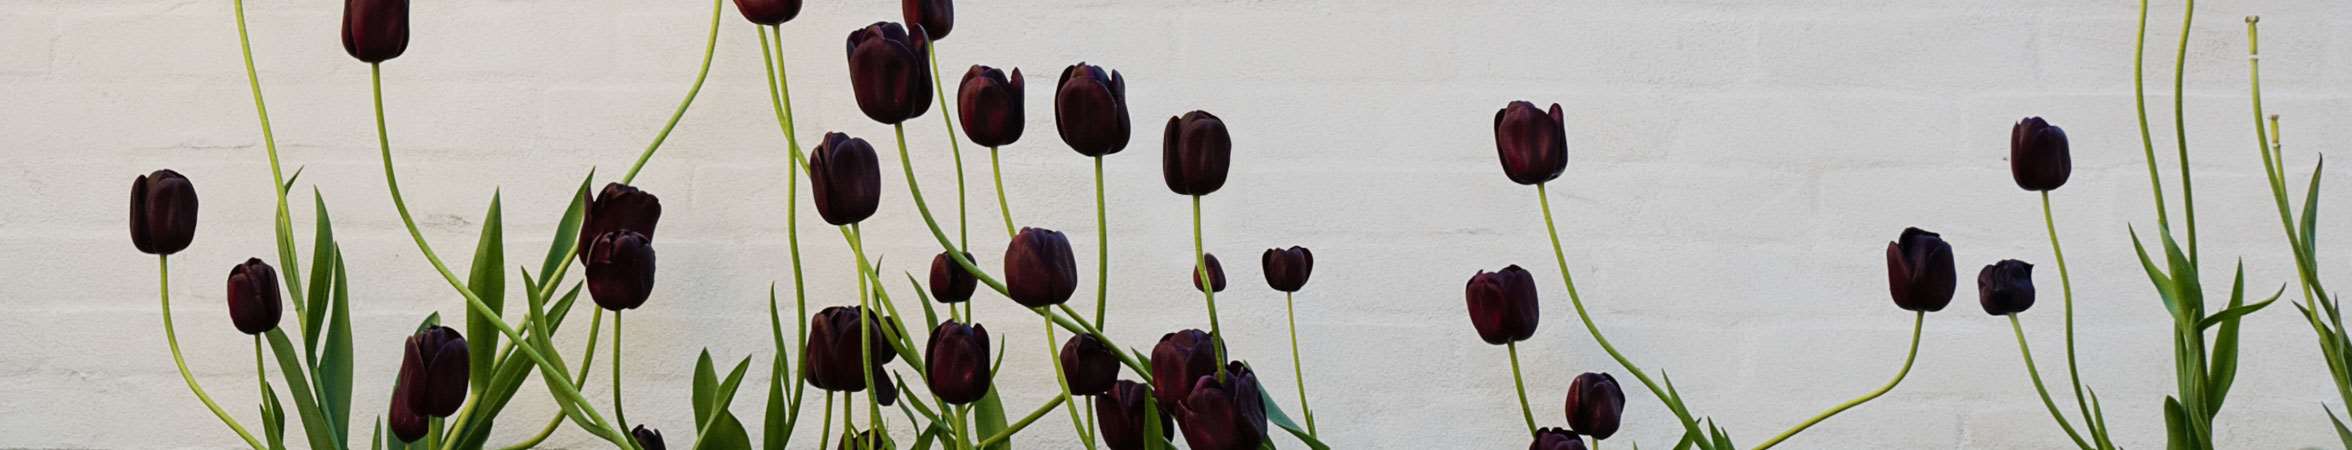 Tulipaner mod mur